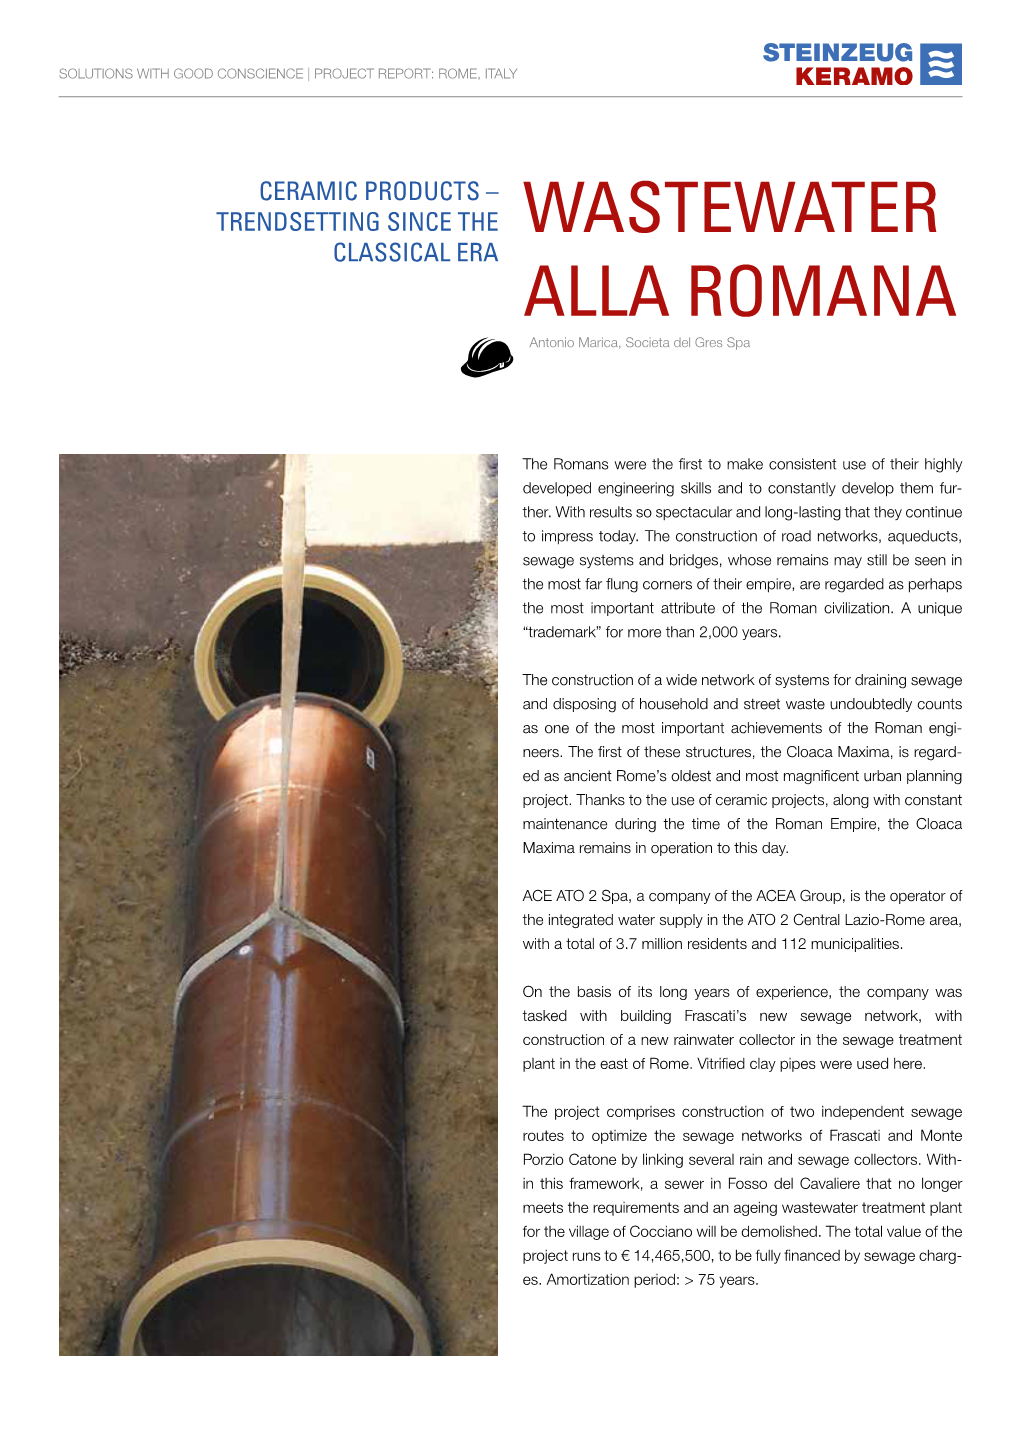 Wastewater Alla Romana Ceramic Products